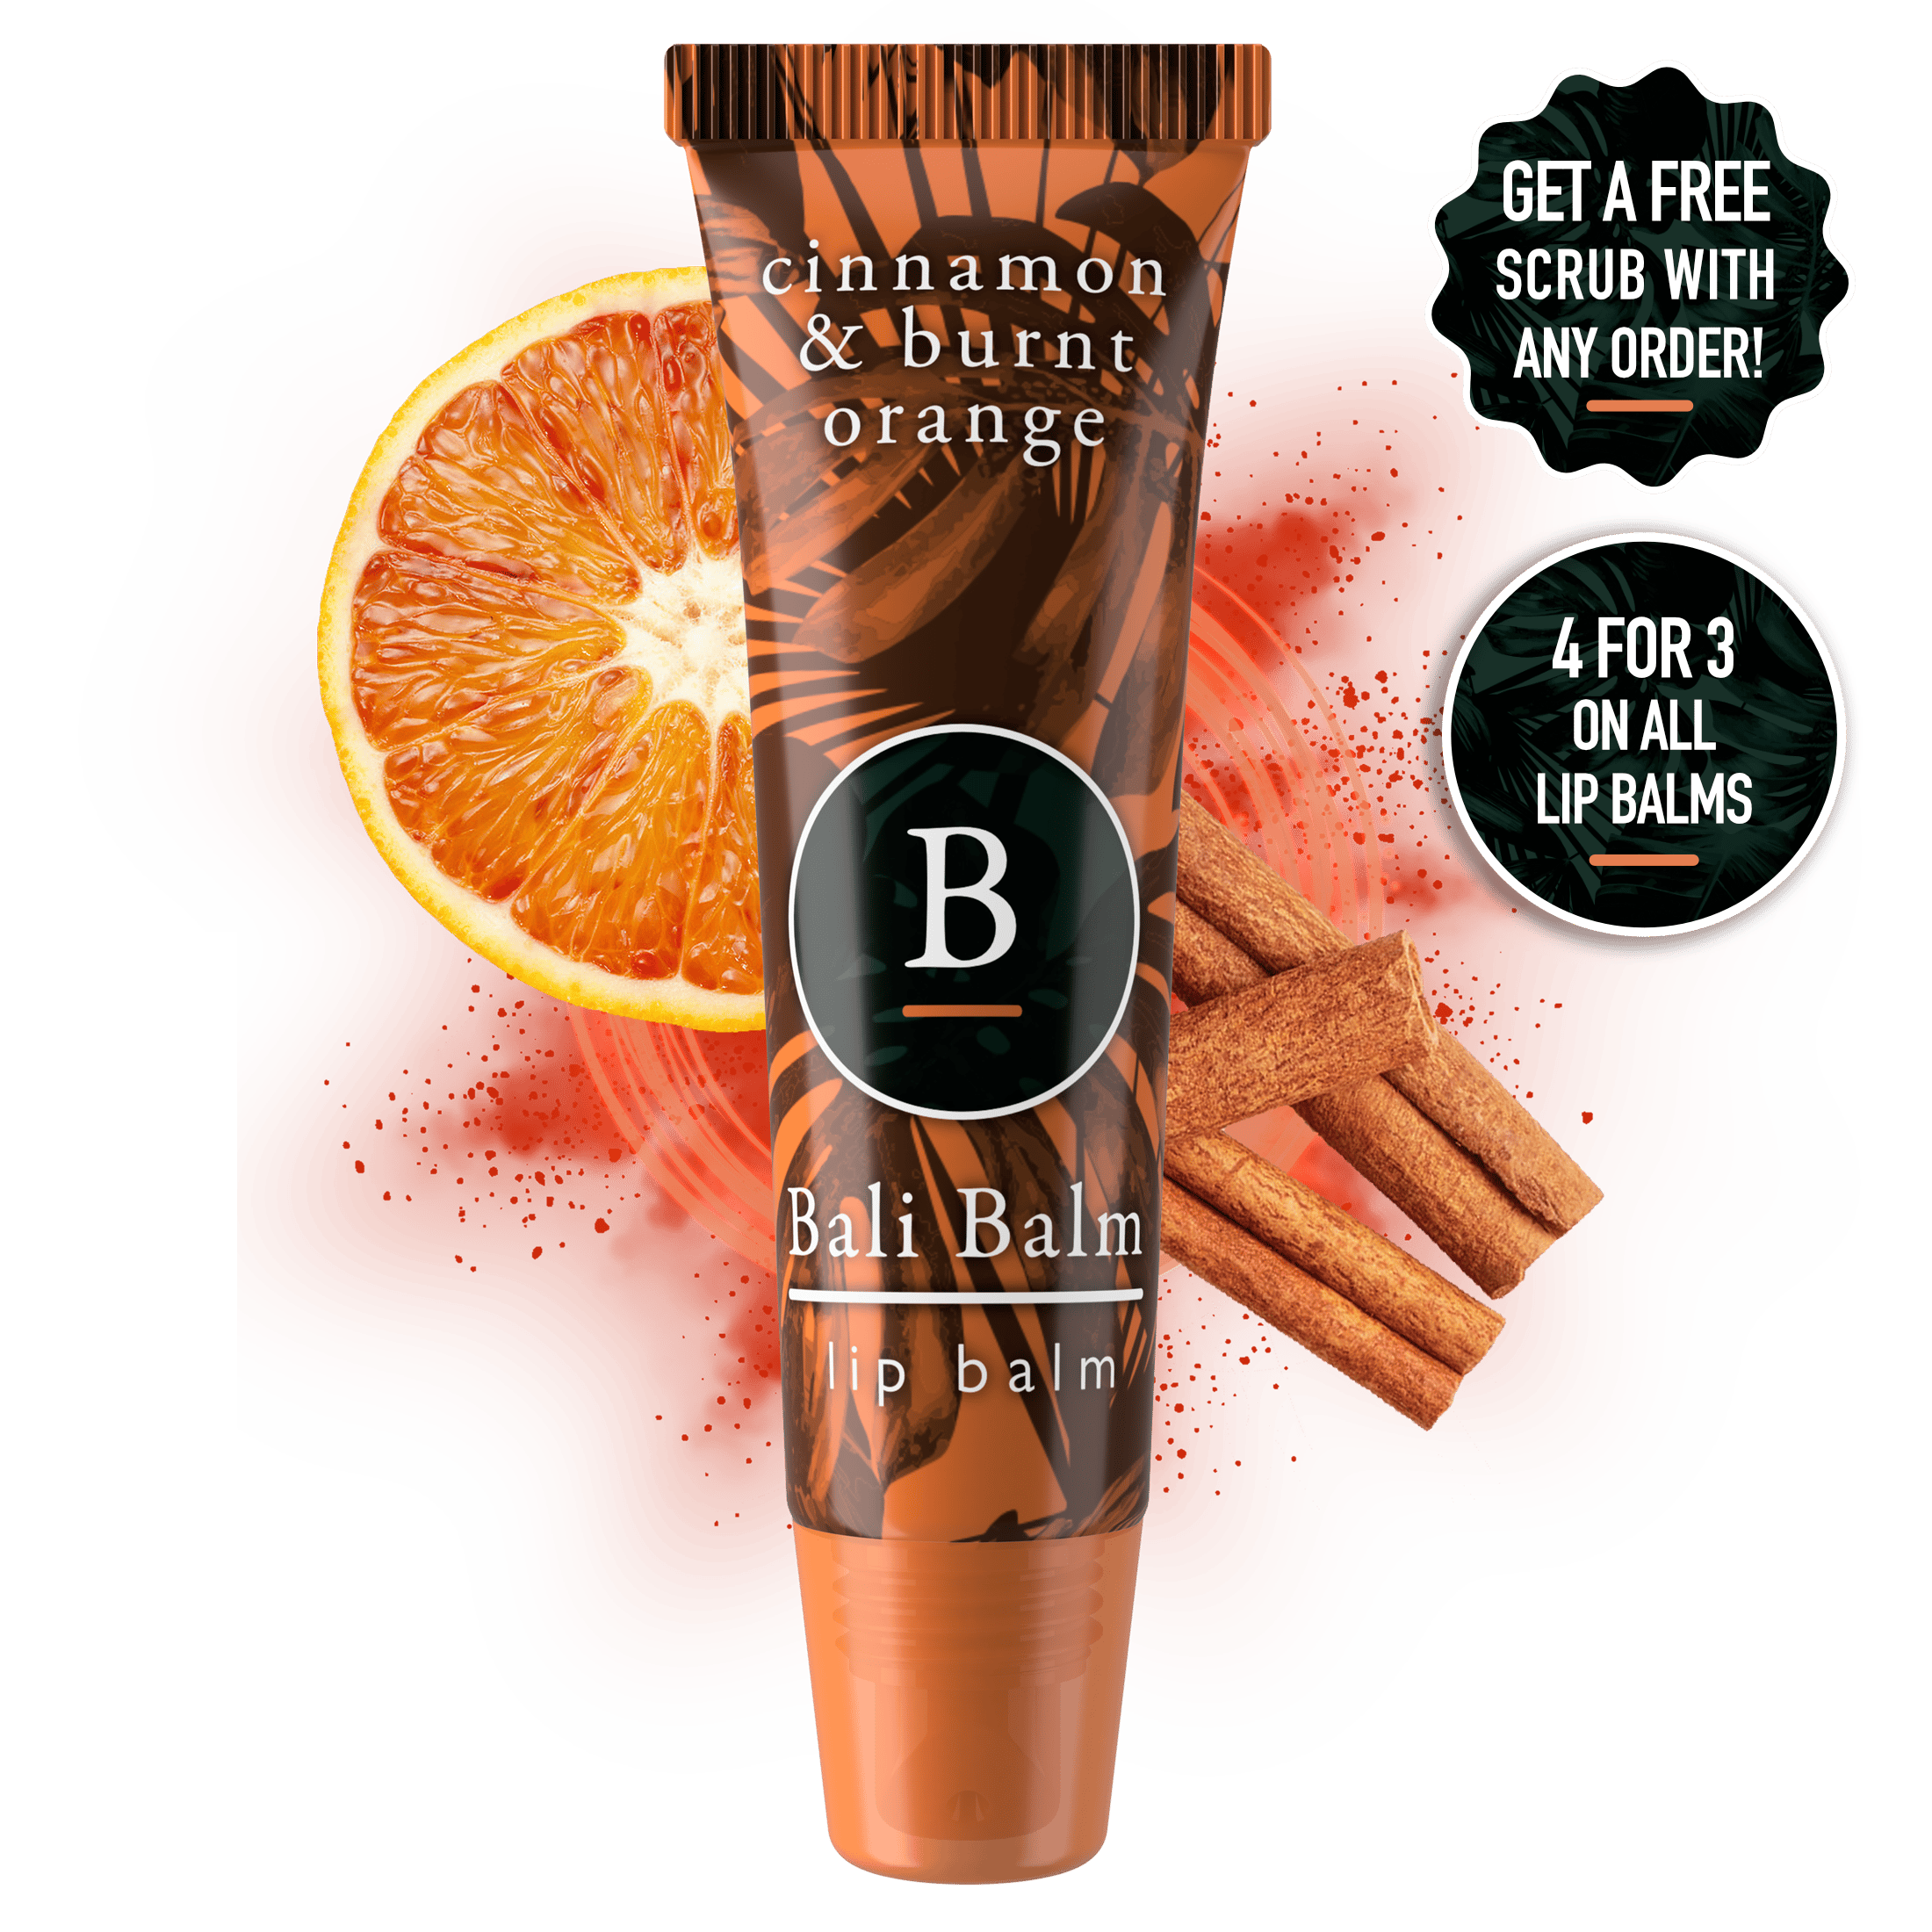 Cinnamon and Burnt Orange Lip Balm online